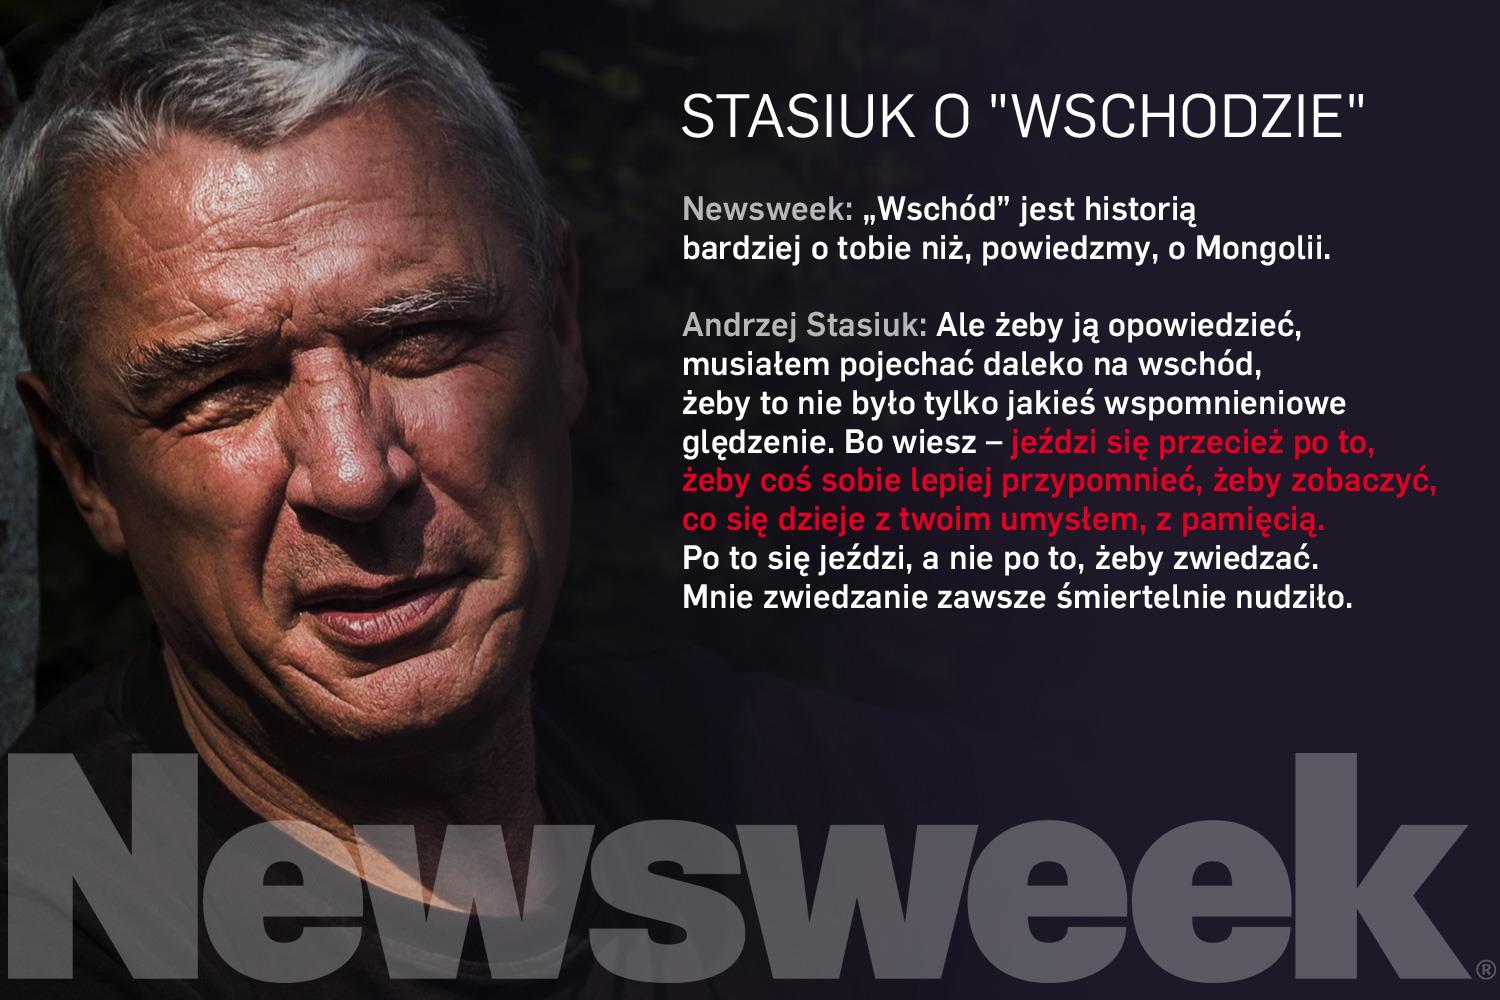 Newsweek 38/2014 galeria promo